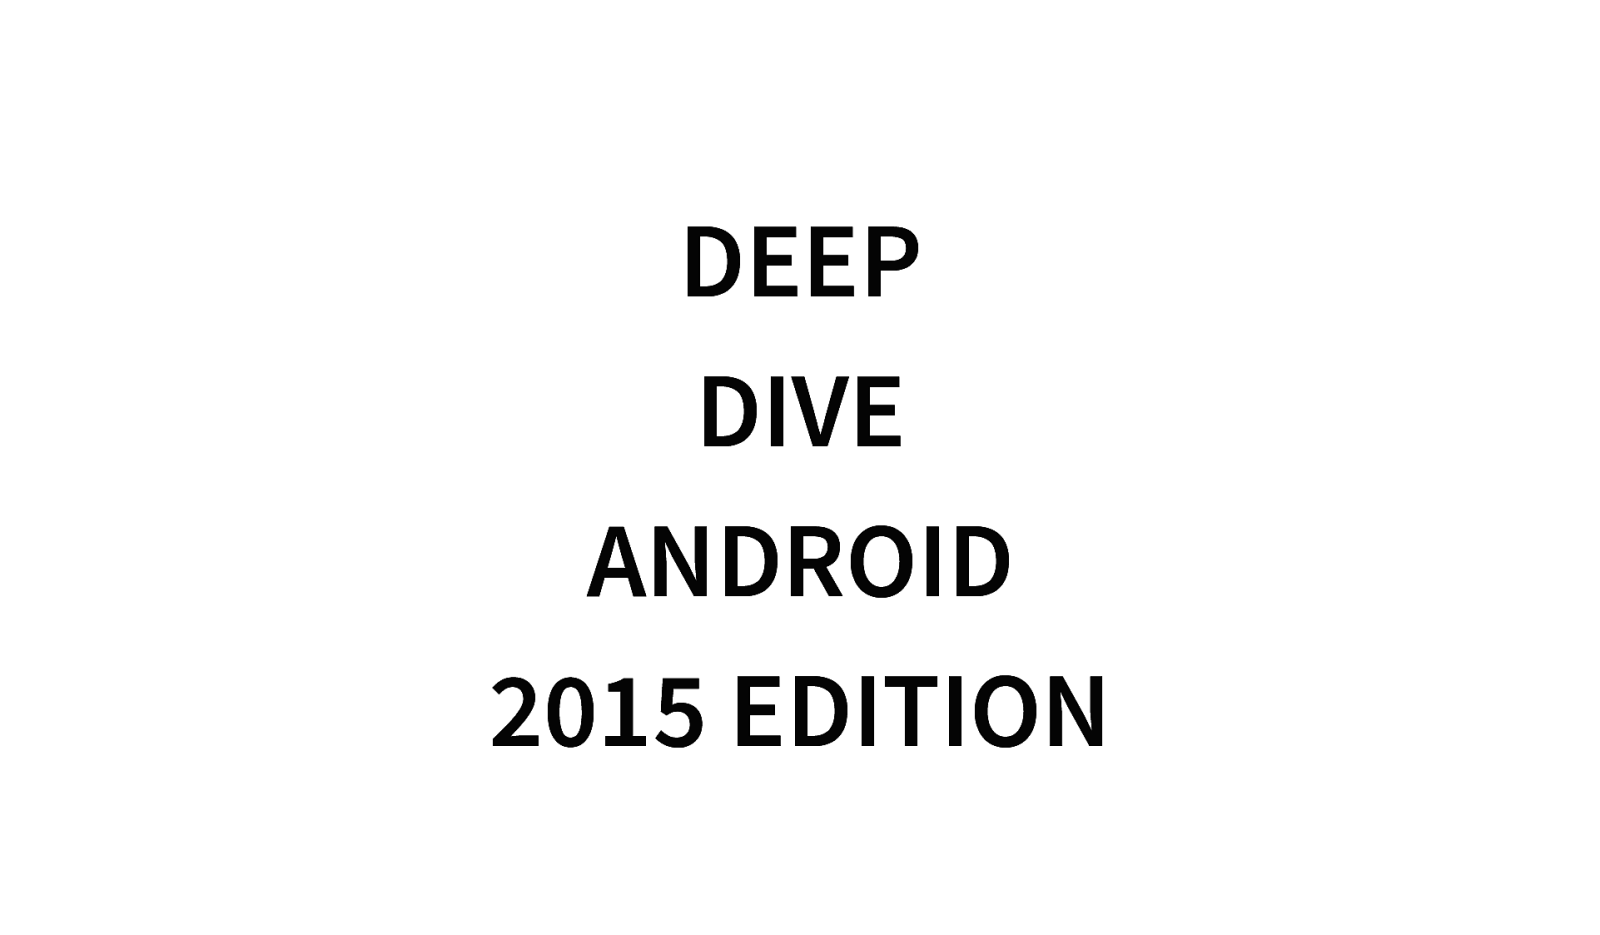 Deep Dive Android Workshop